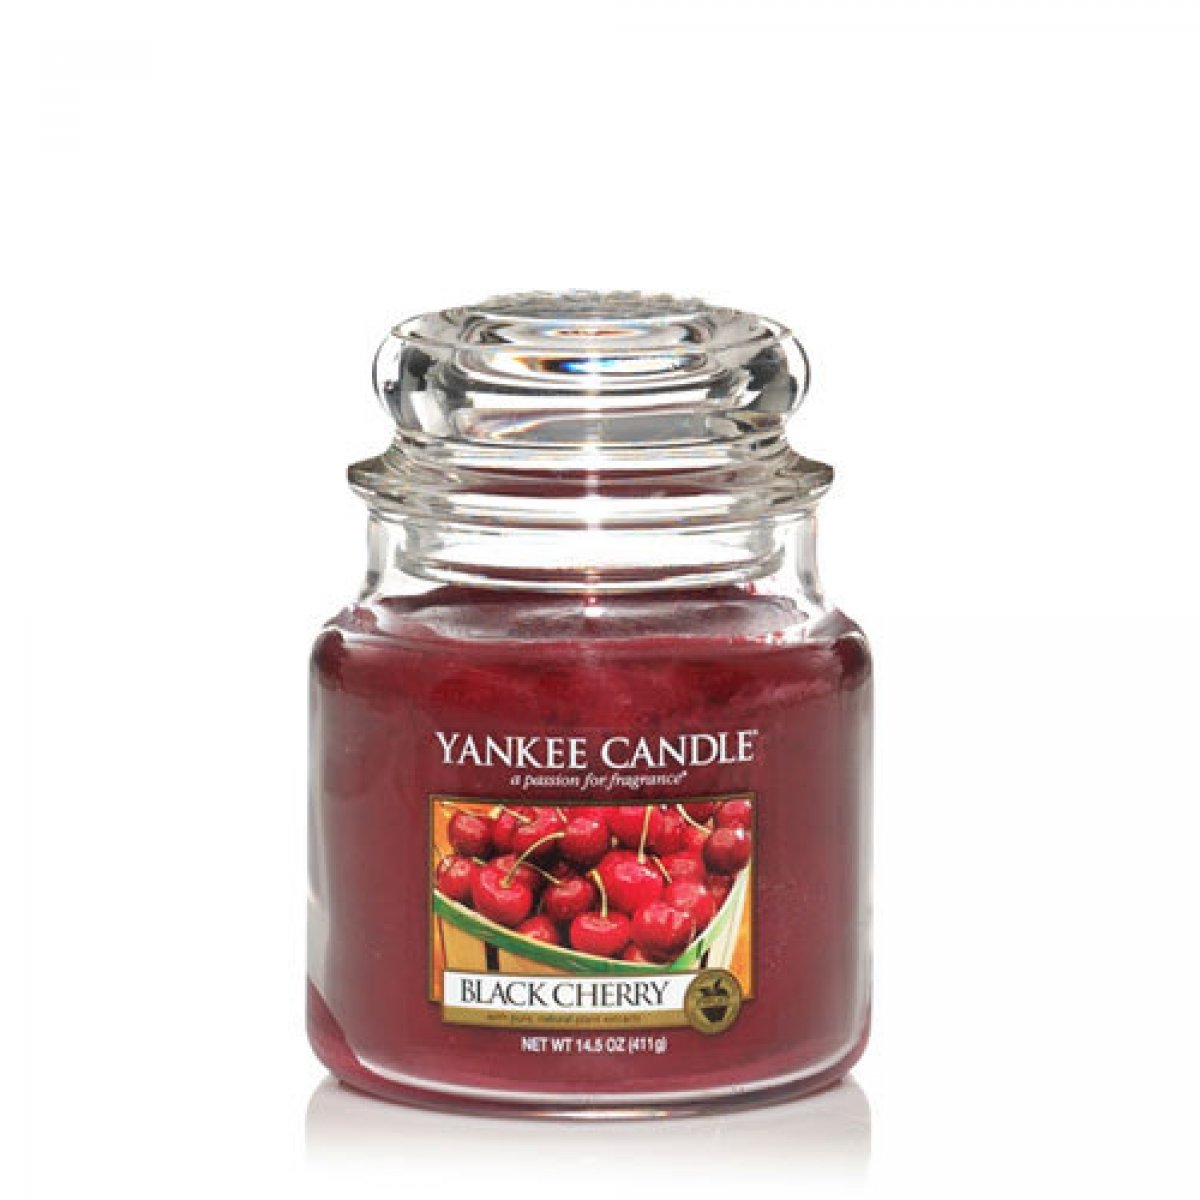 Giara media Yankee Candle Black Cherry Fragranza fruttata